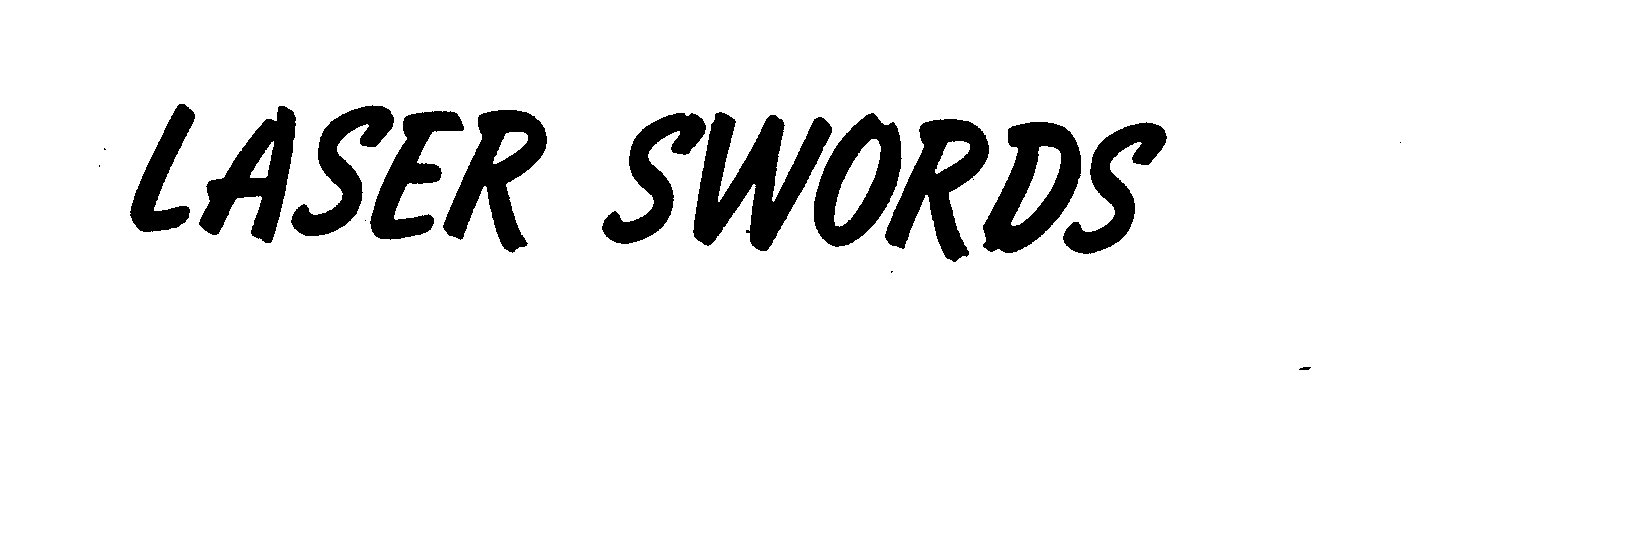  LASER SWORDS